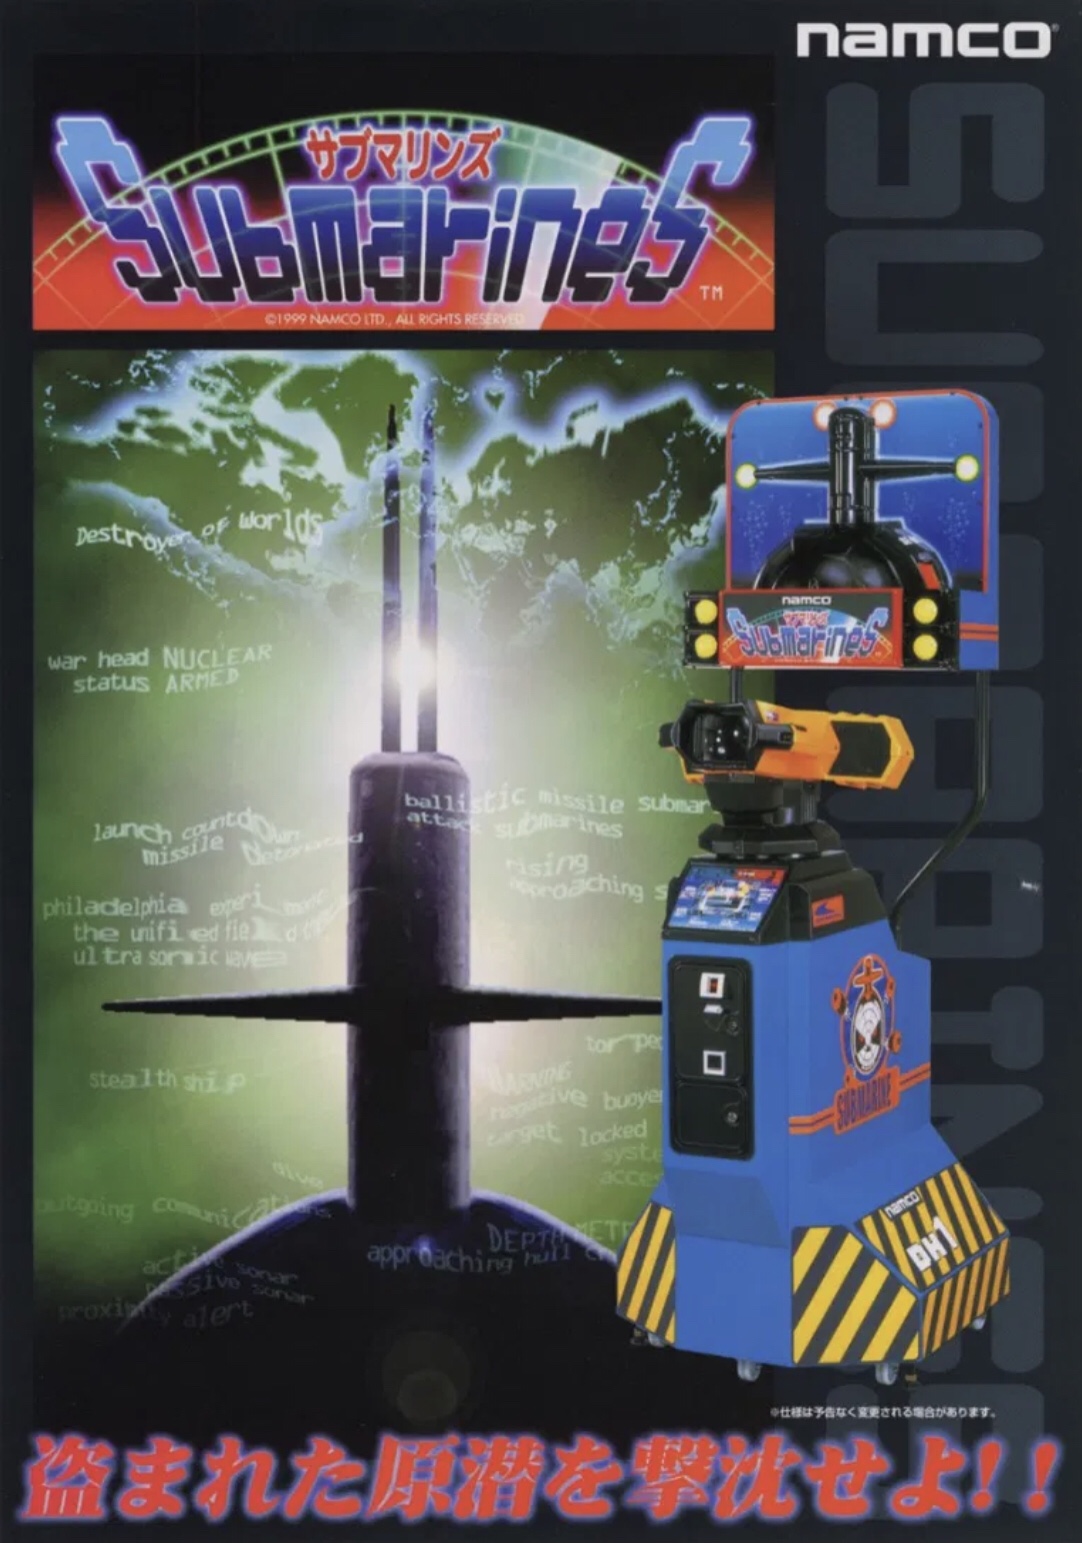 Submarines game flyer.jpeg